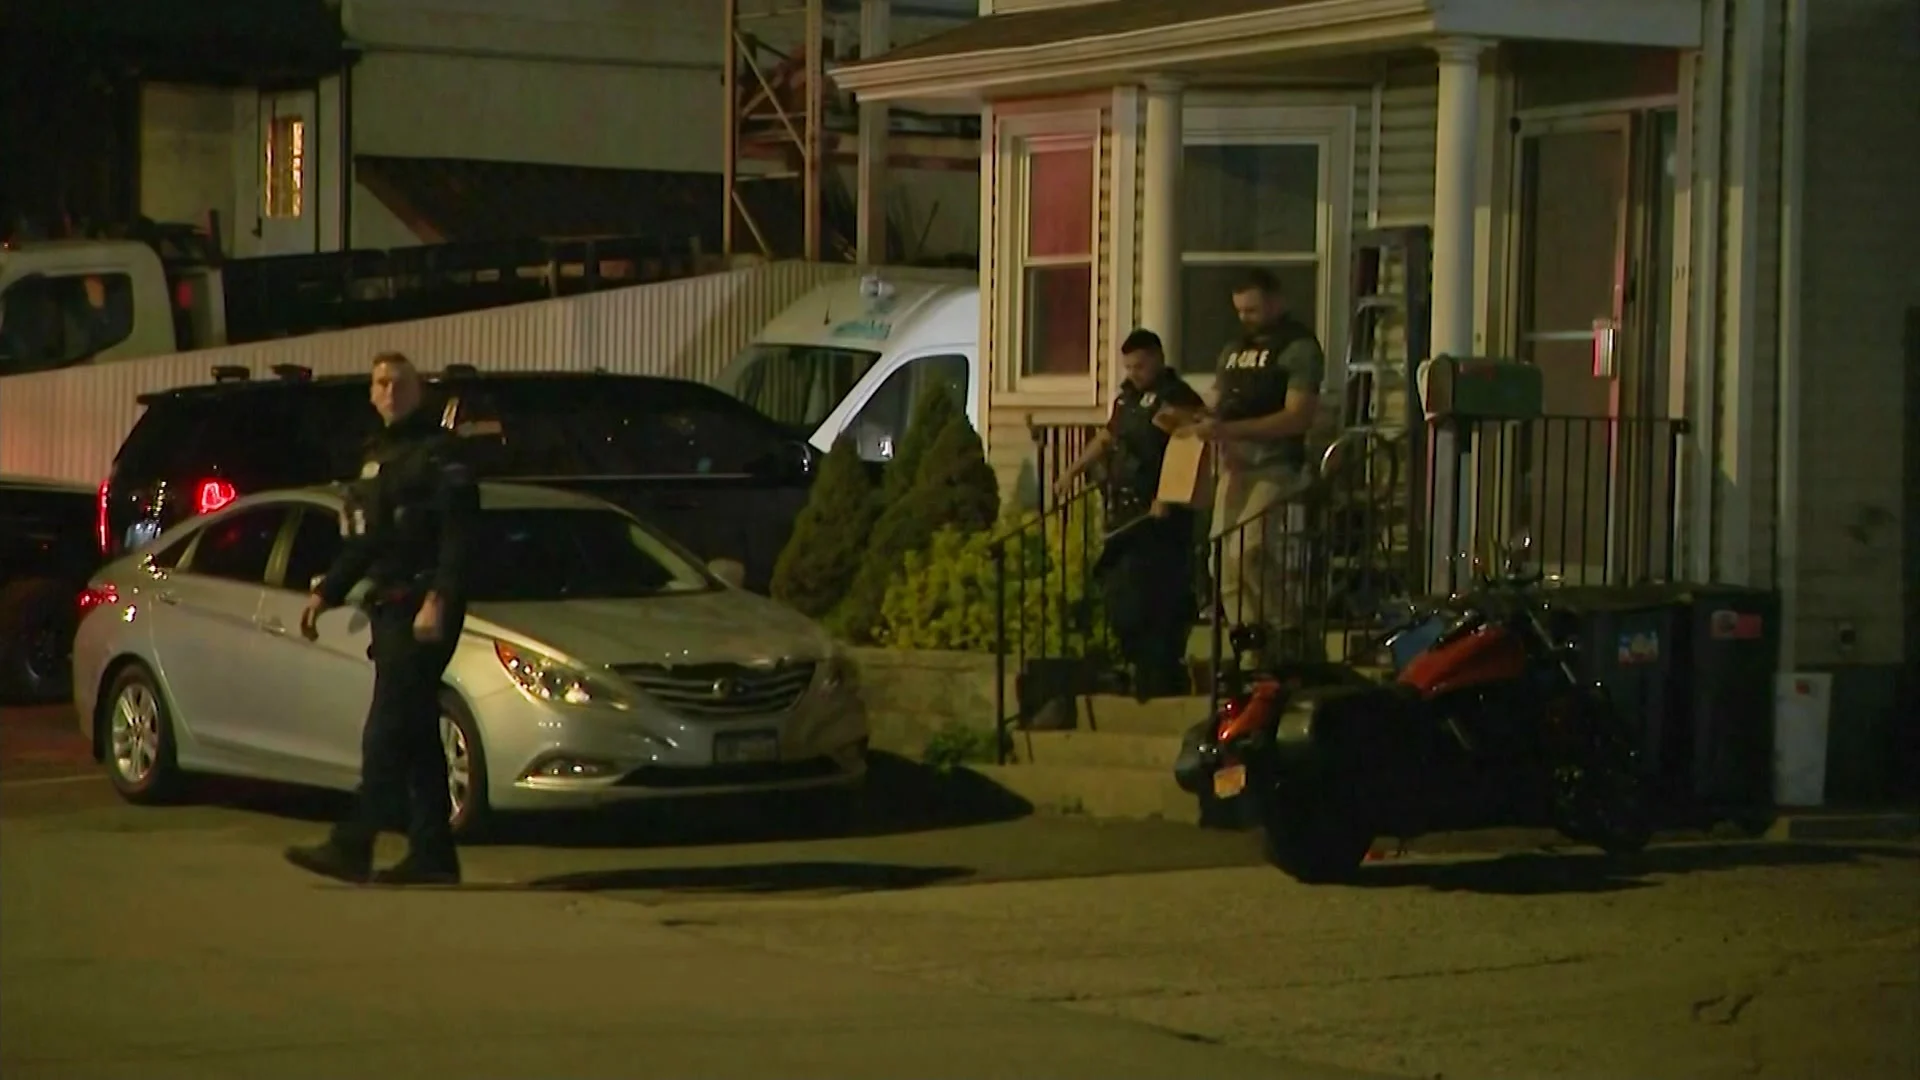 Police swarms Elmsford neighborhood, details remain scarce